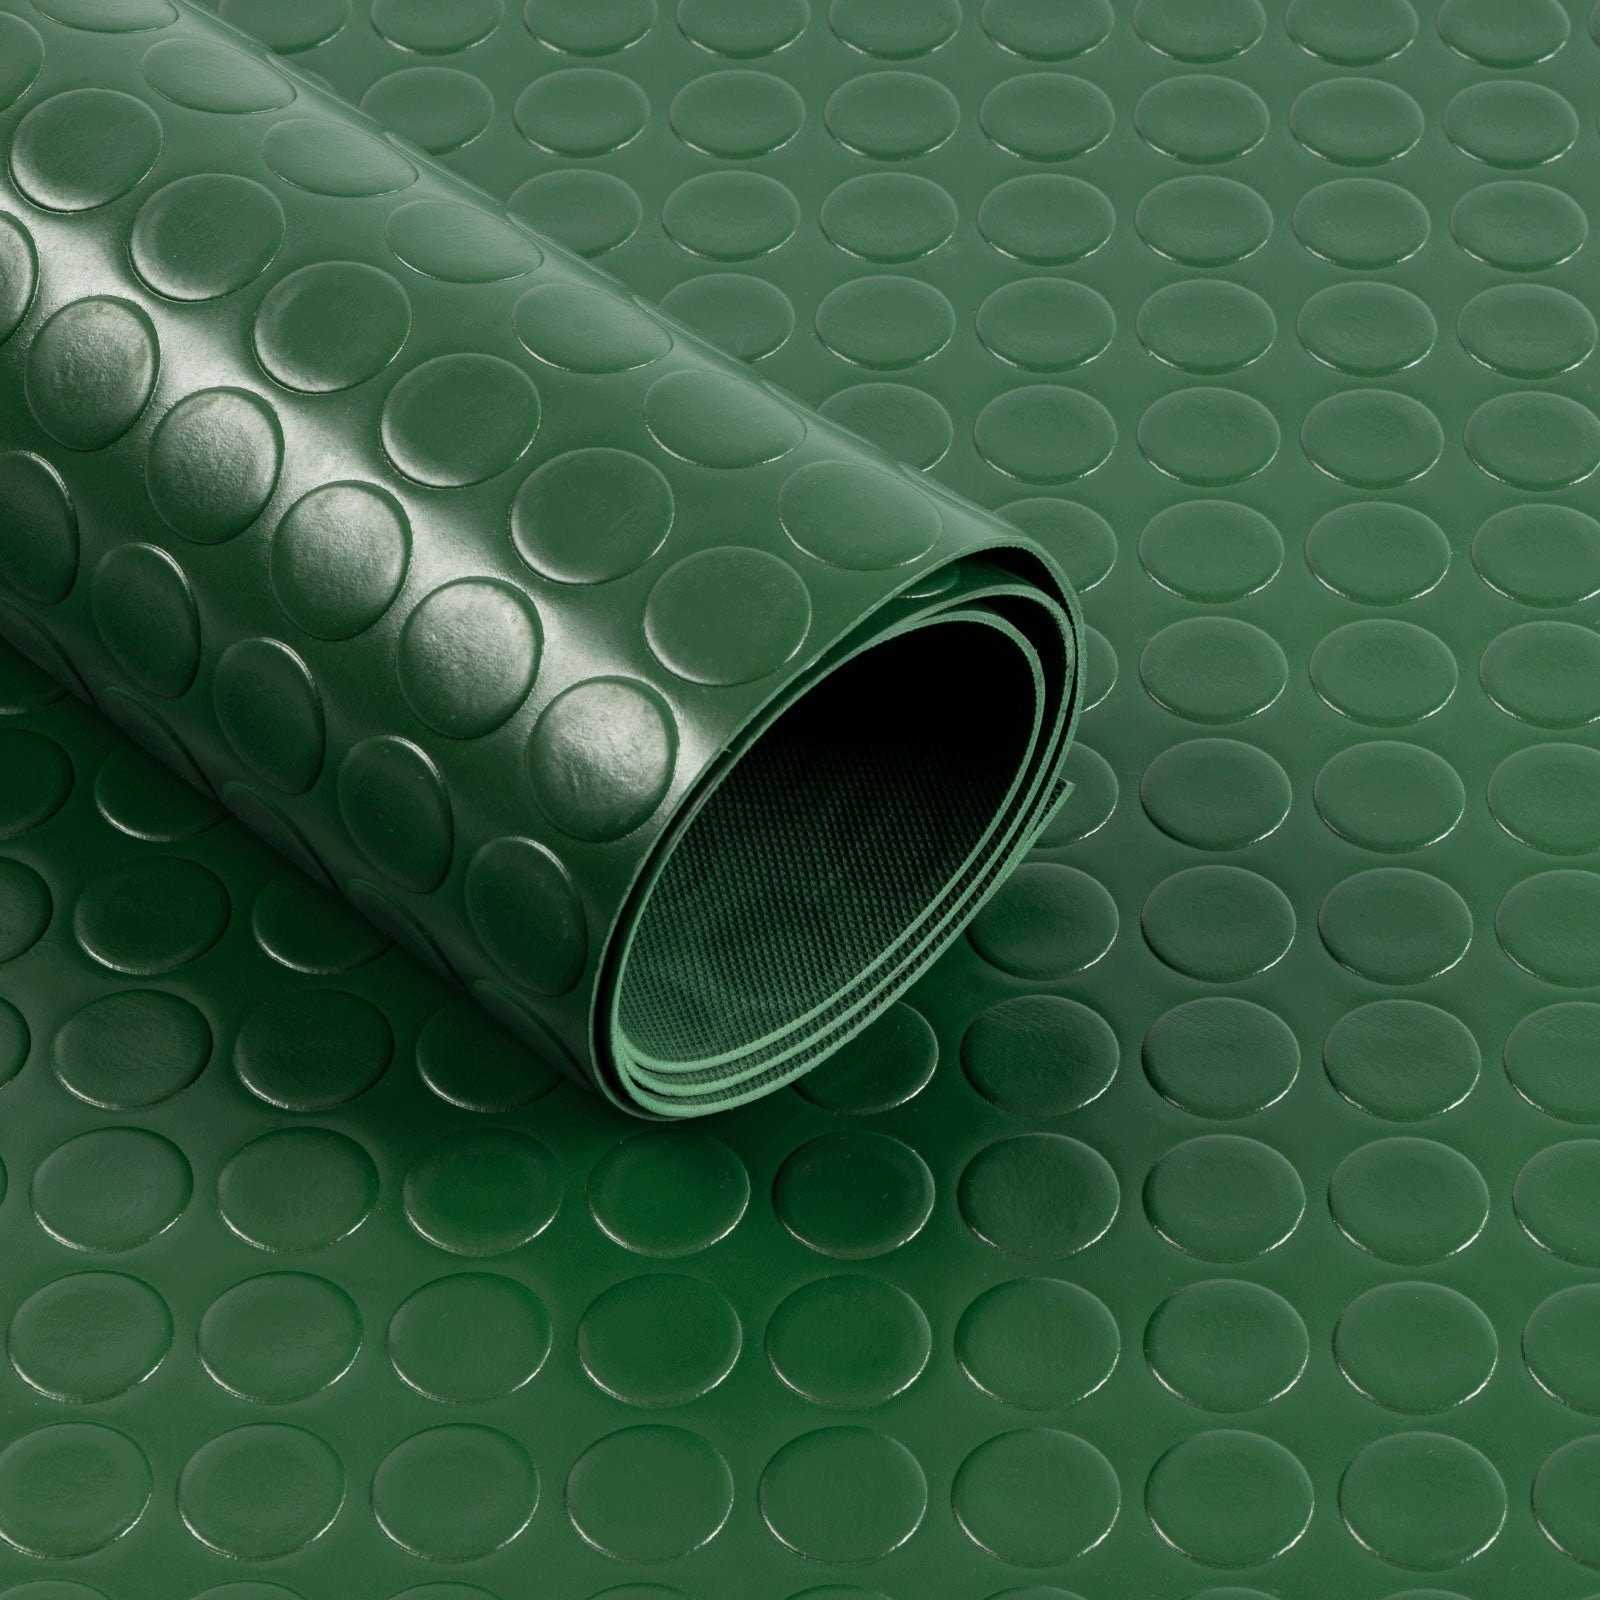 Stärke viele Grün Bodenschutzmatte Farben PVC-Bodenbelag, Große Noppen, 2mm, Kubus